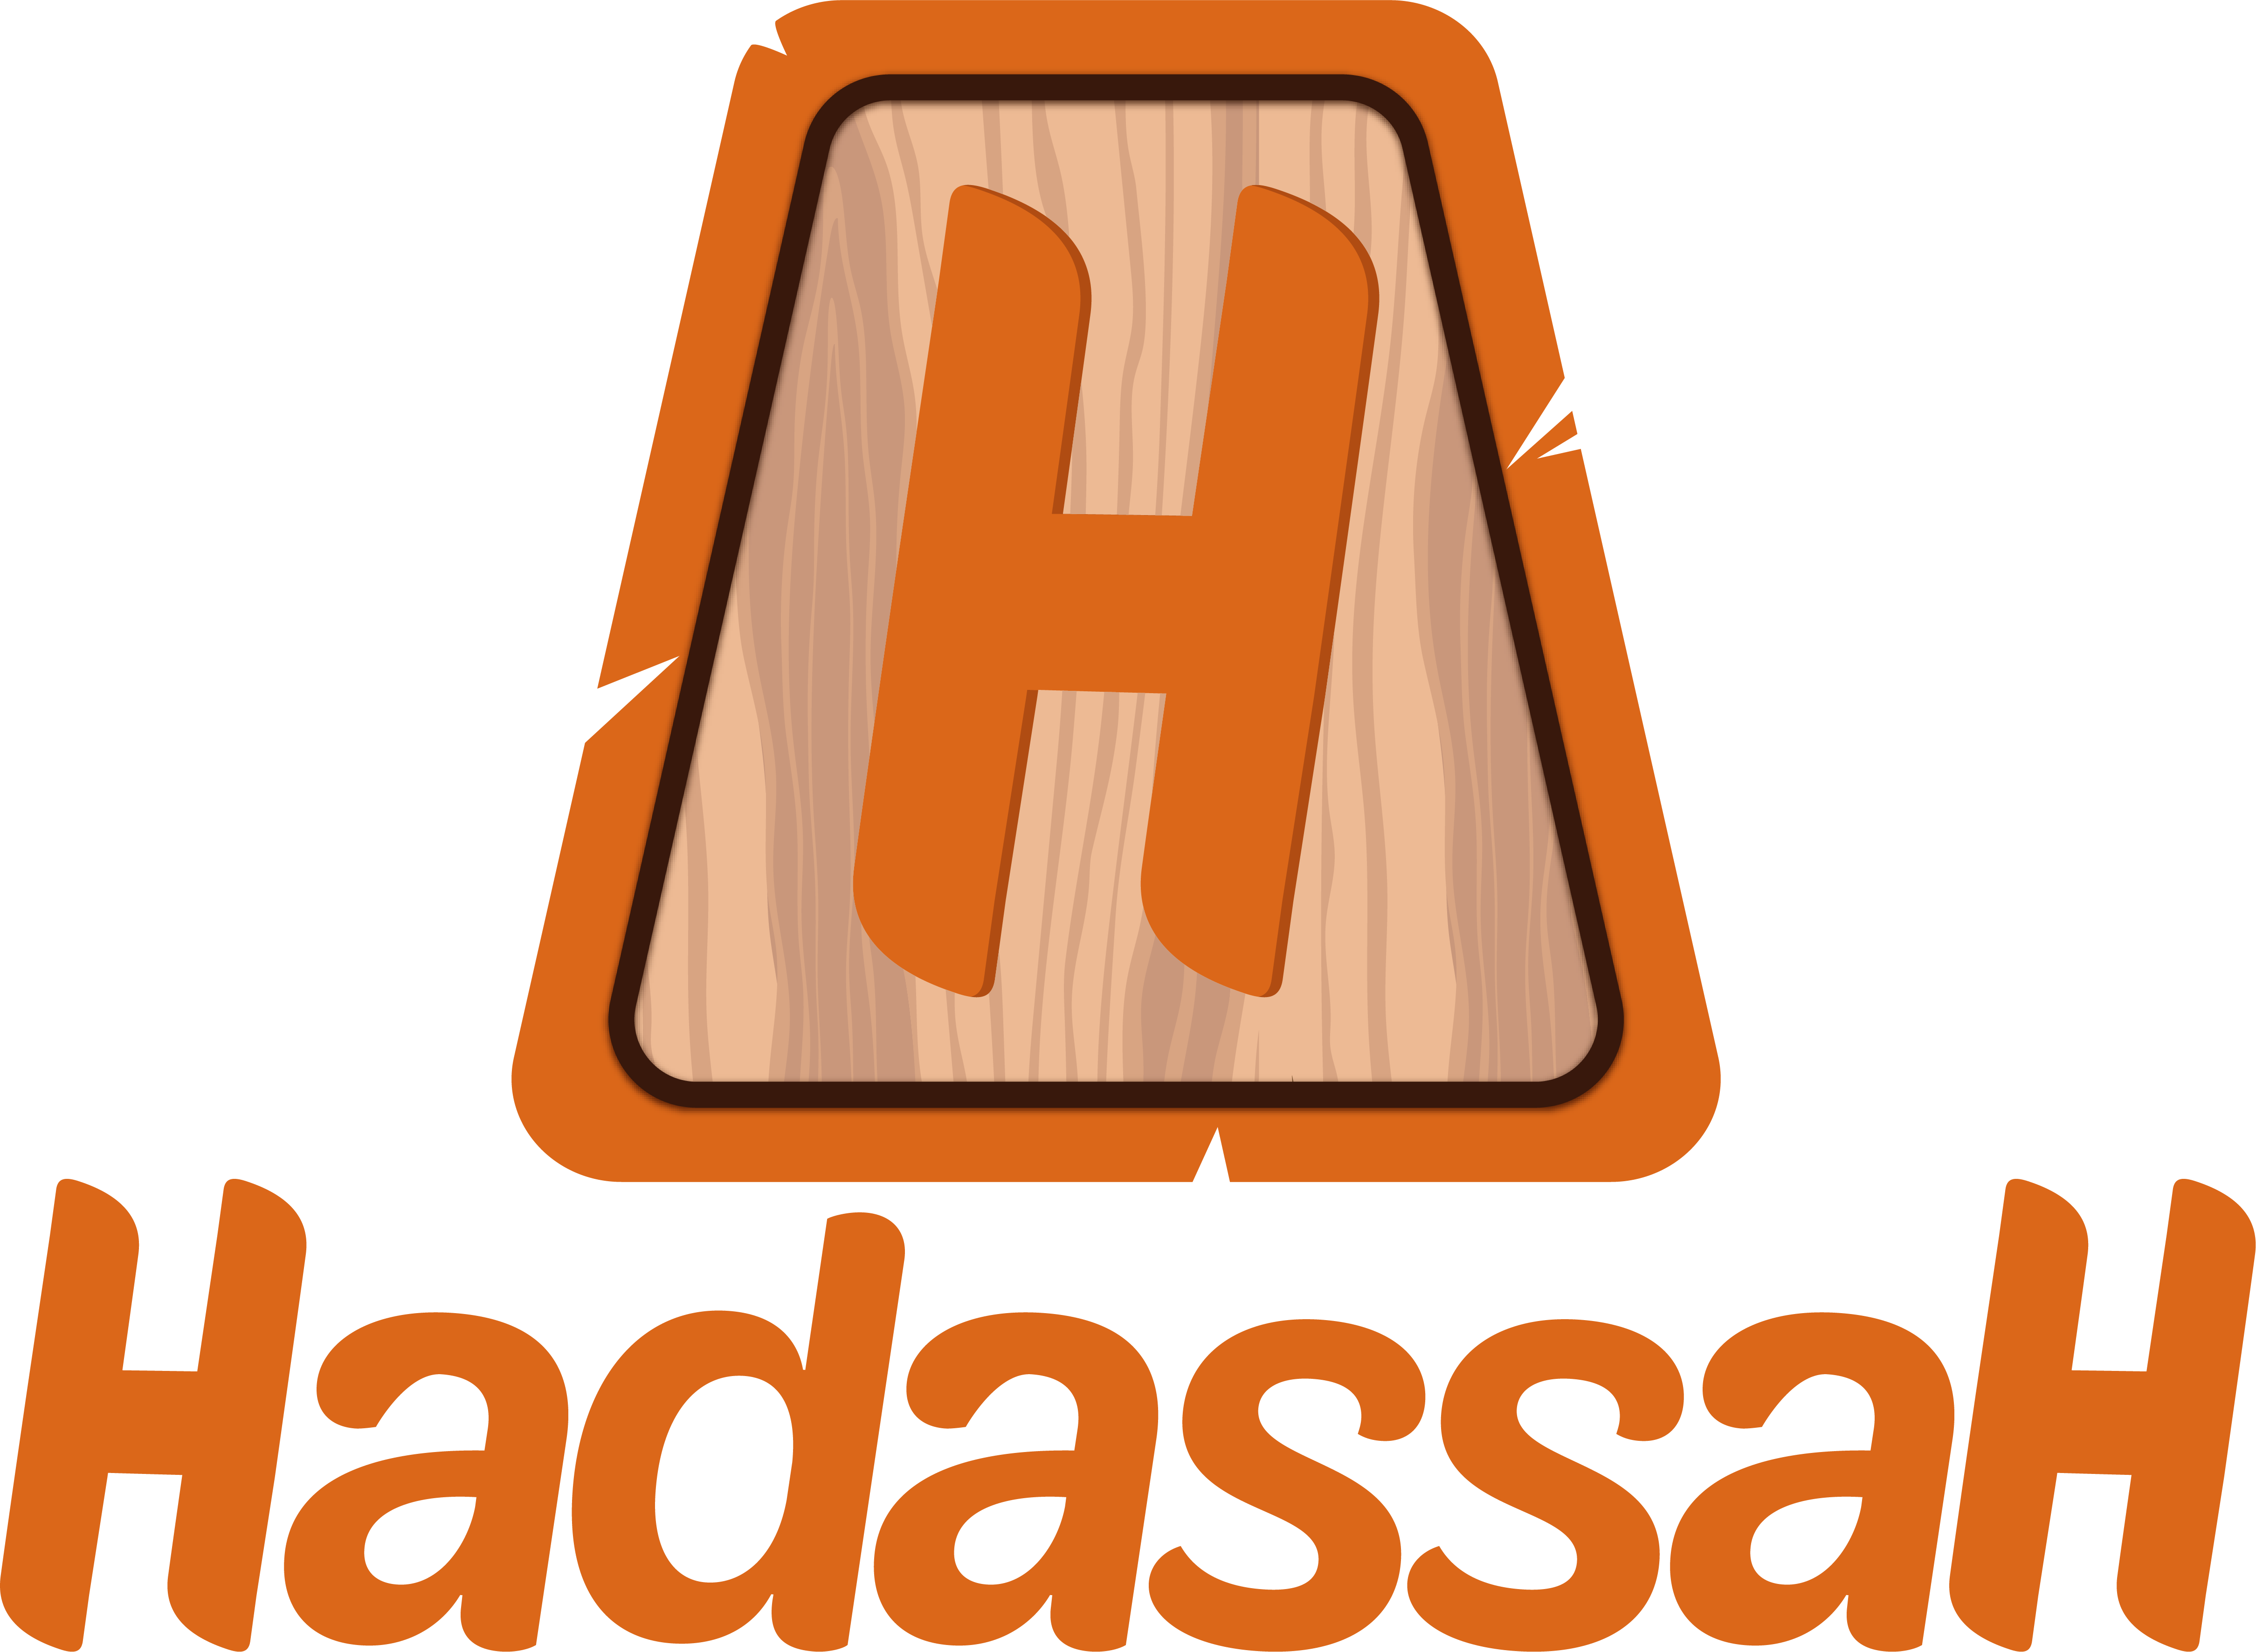 Hadassah